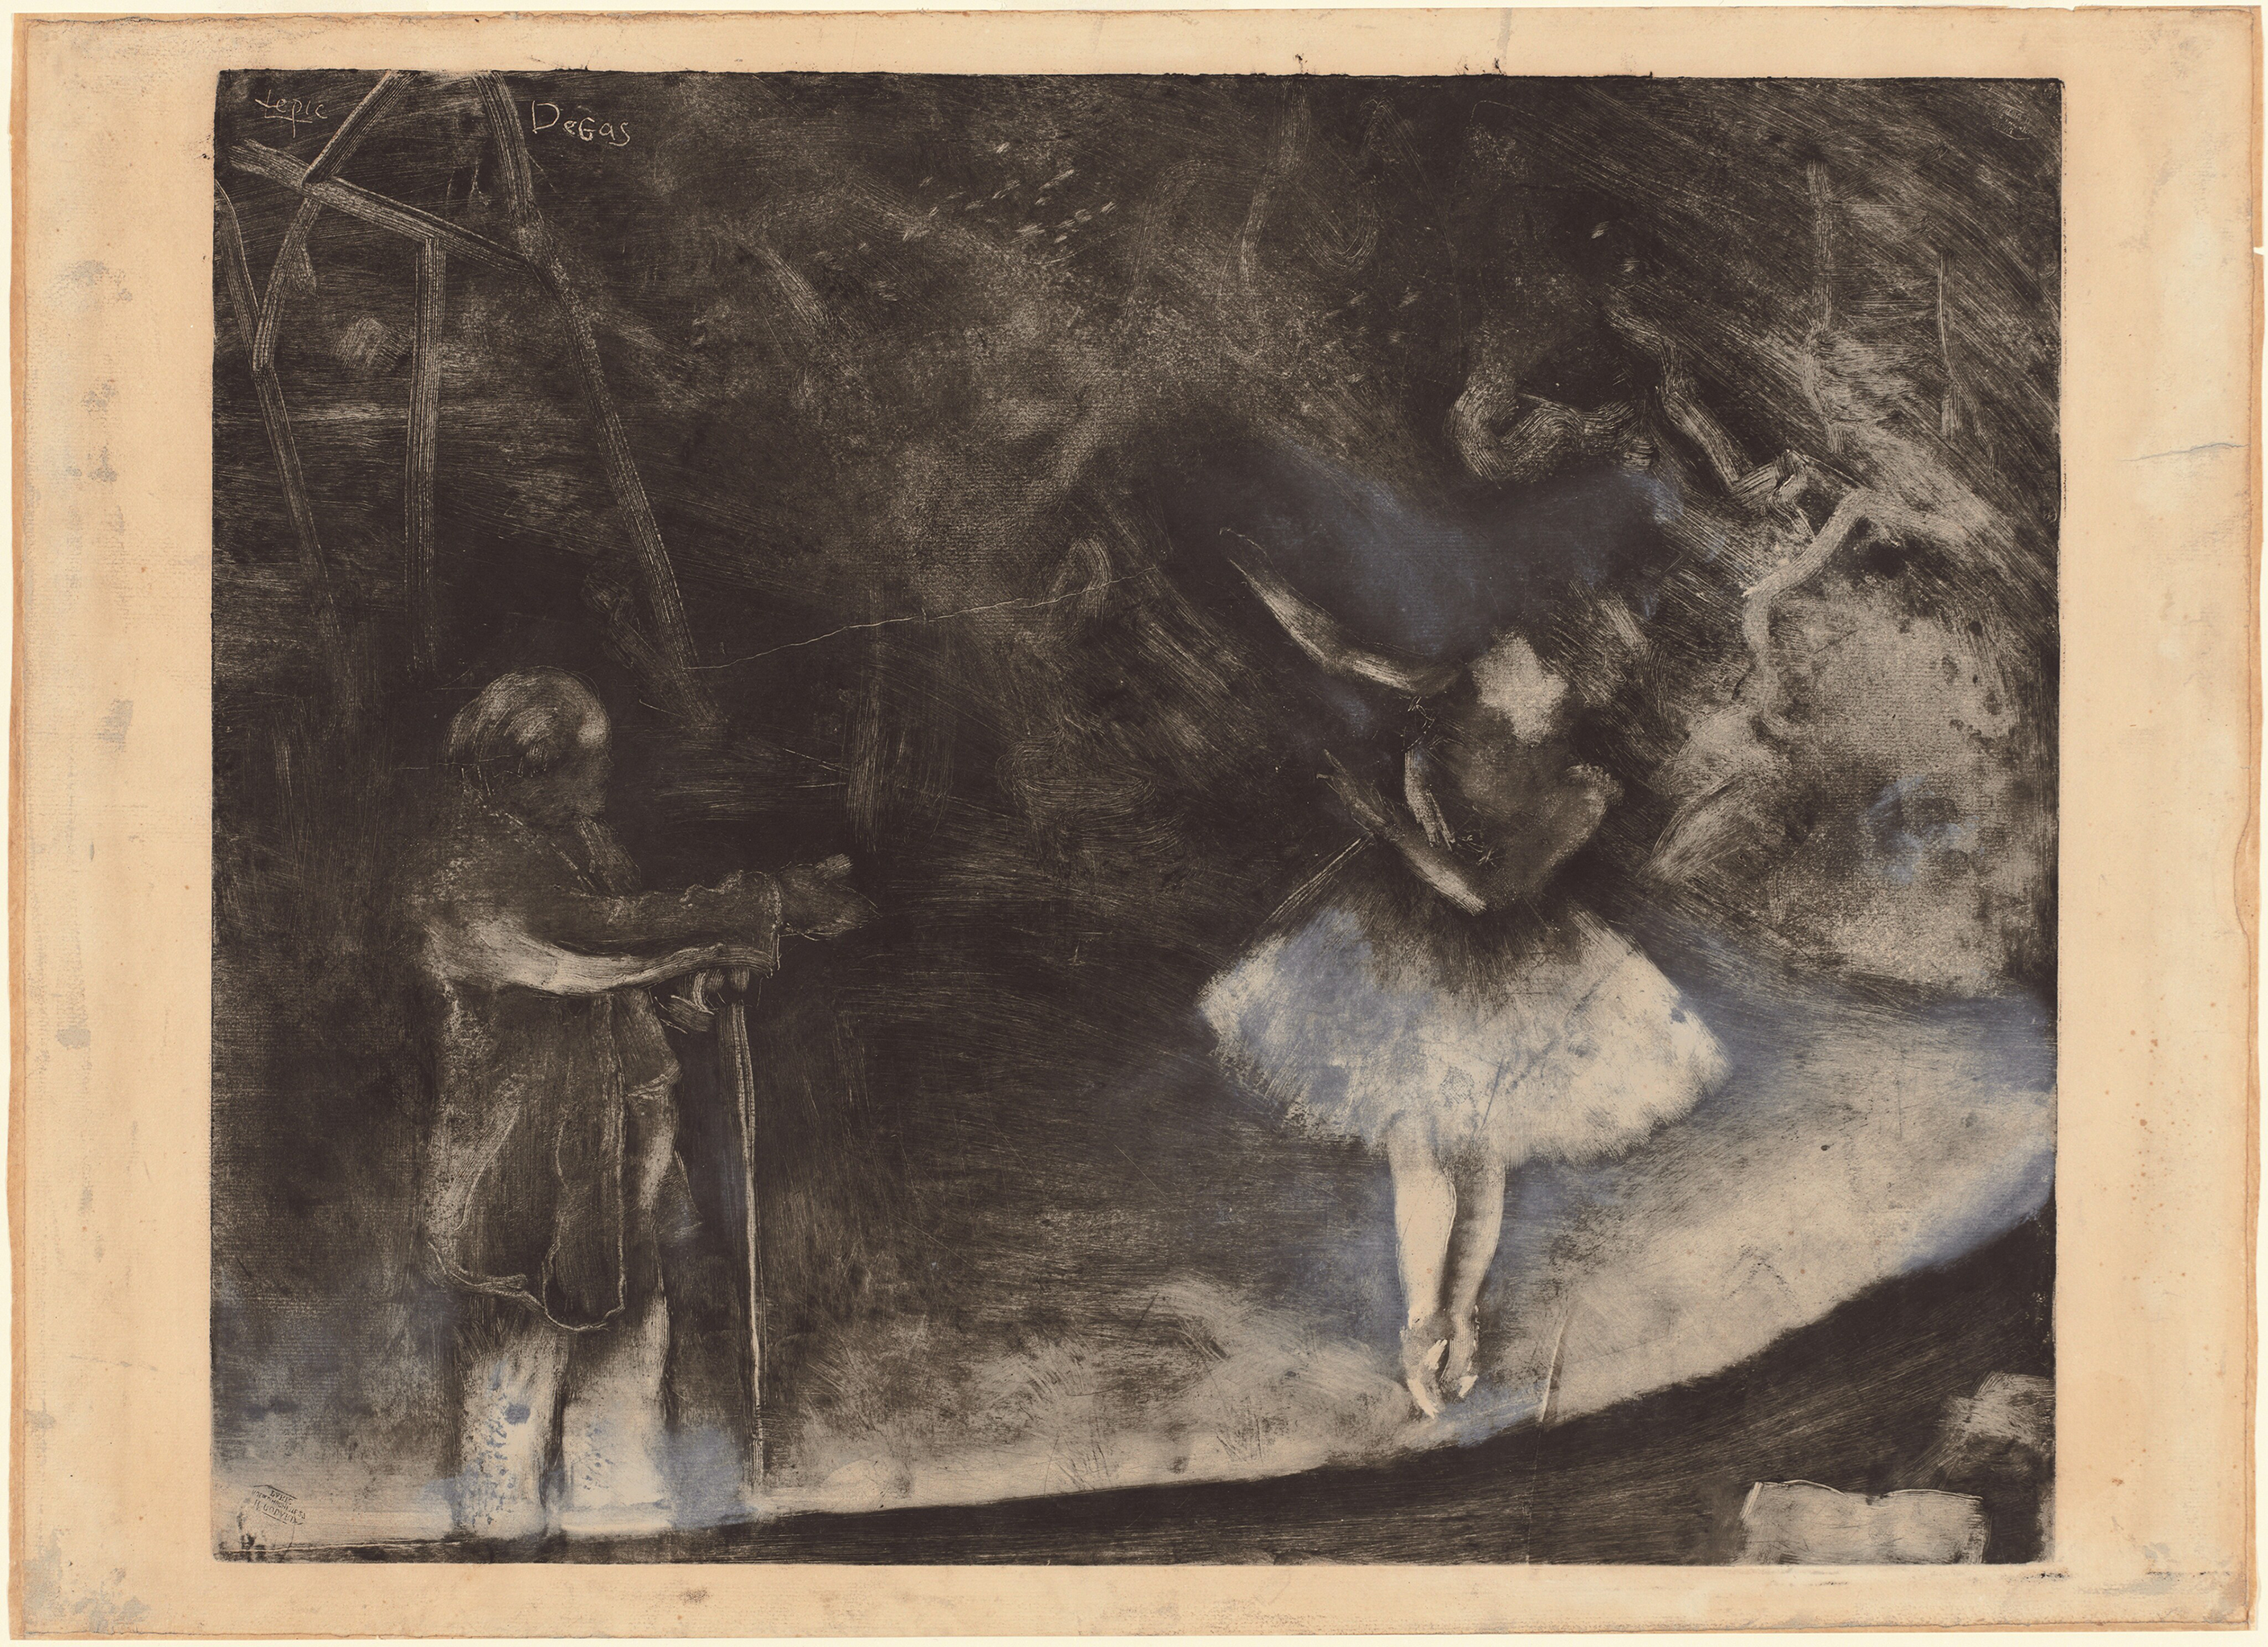 https://blobcdn.nelson-atkins.org/wpmediablob/FPC/img/Impressionism/614_F73-30_Degas_Rehearsal-of-the-Ballet/degas-rehearsal-02.png